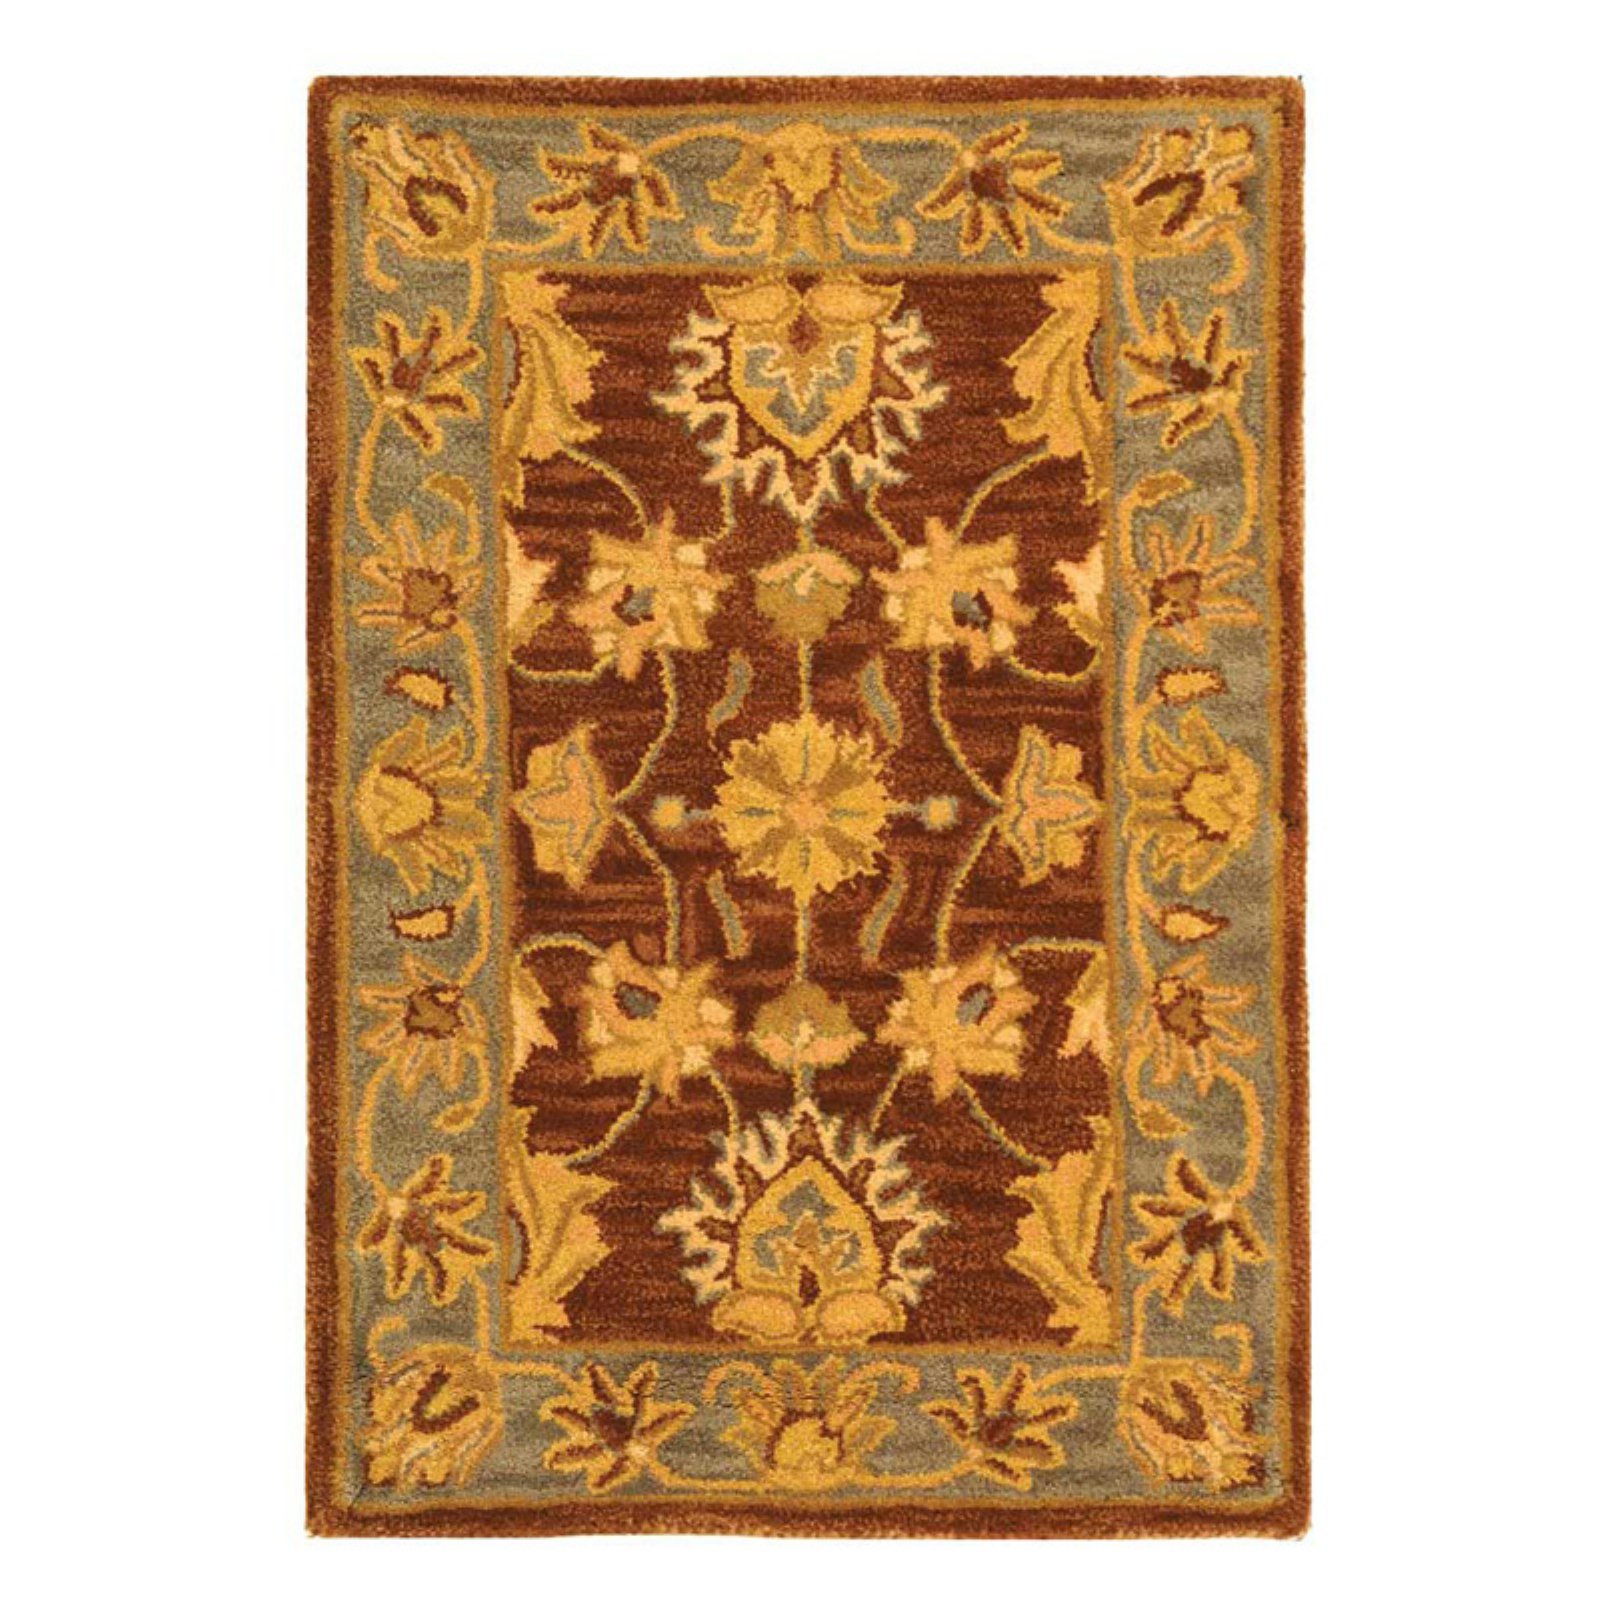 SAFAVIEH Heritage Regis Traditional Wool Area Rug, Brown/Blue, 4'6" x 6'6" Oval - image 1 of 9